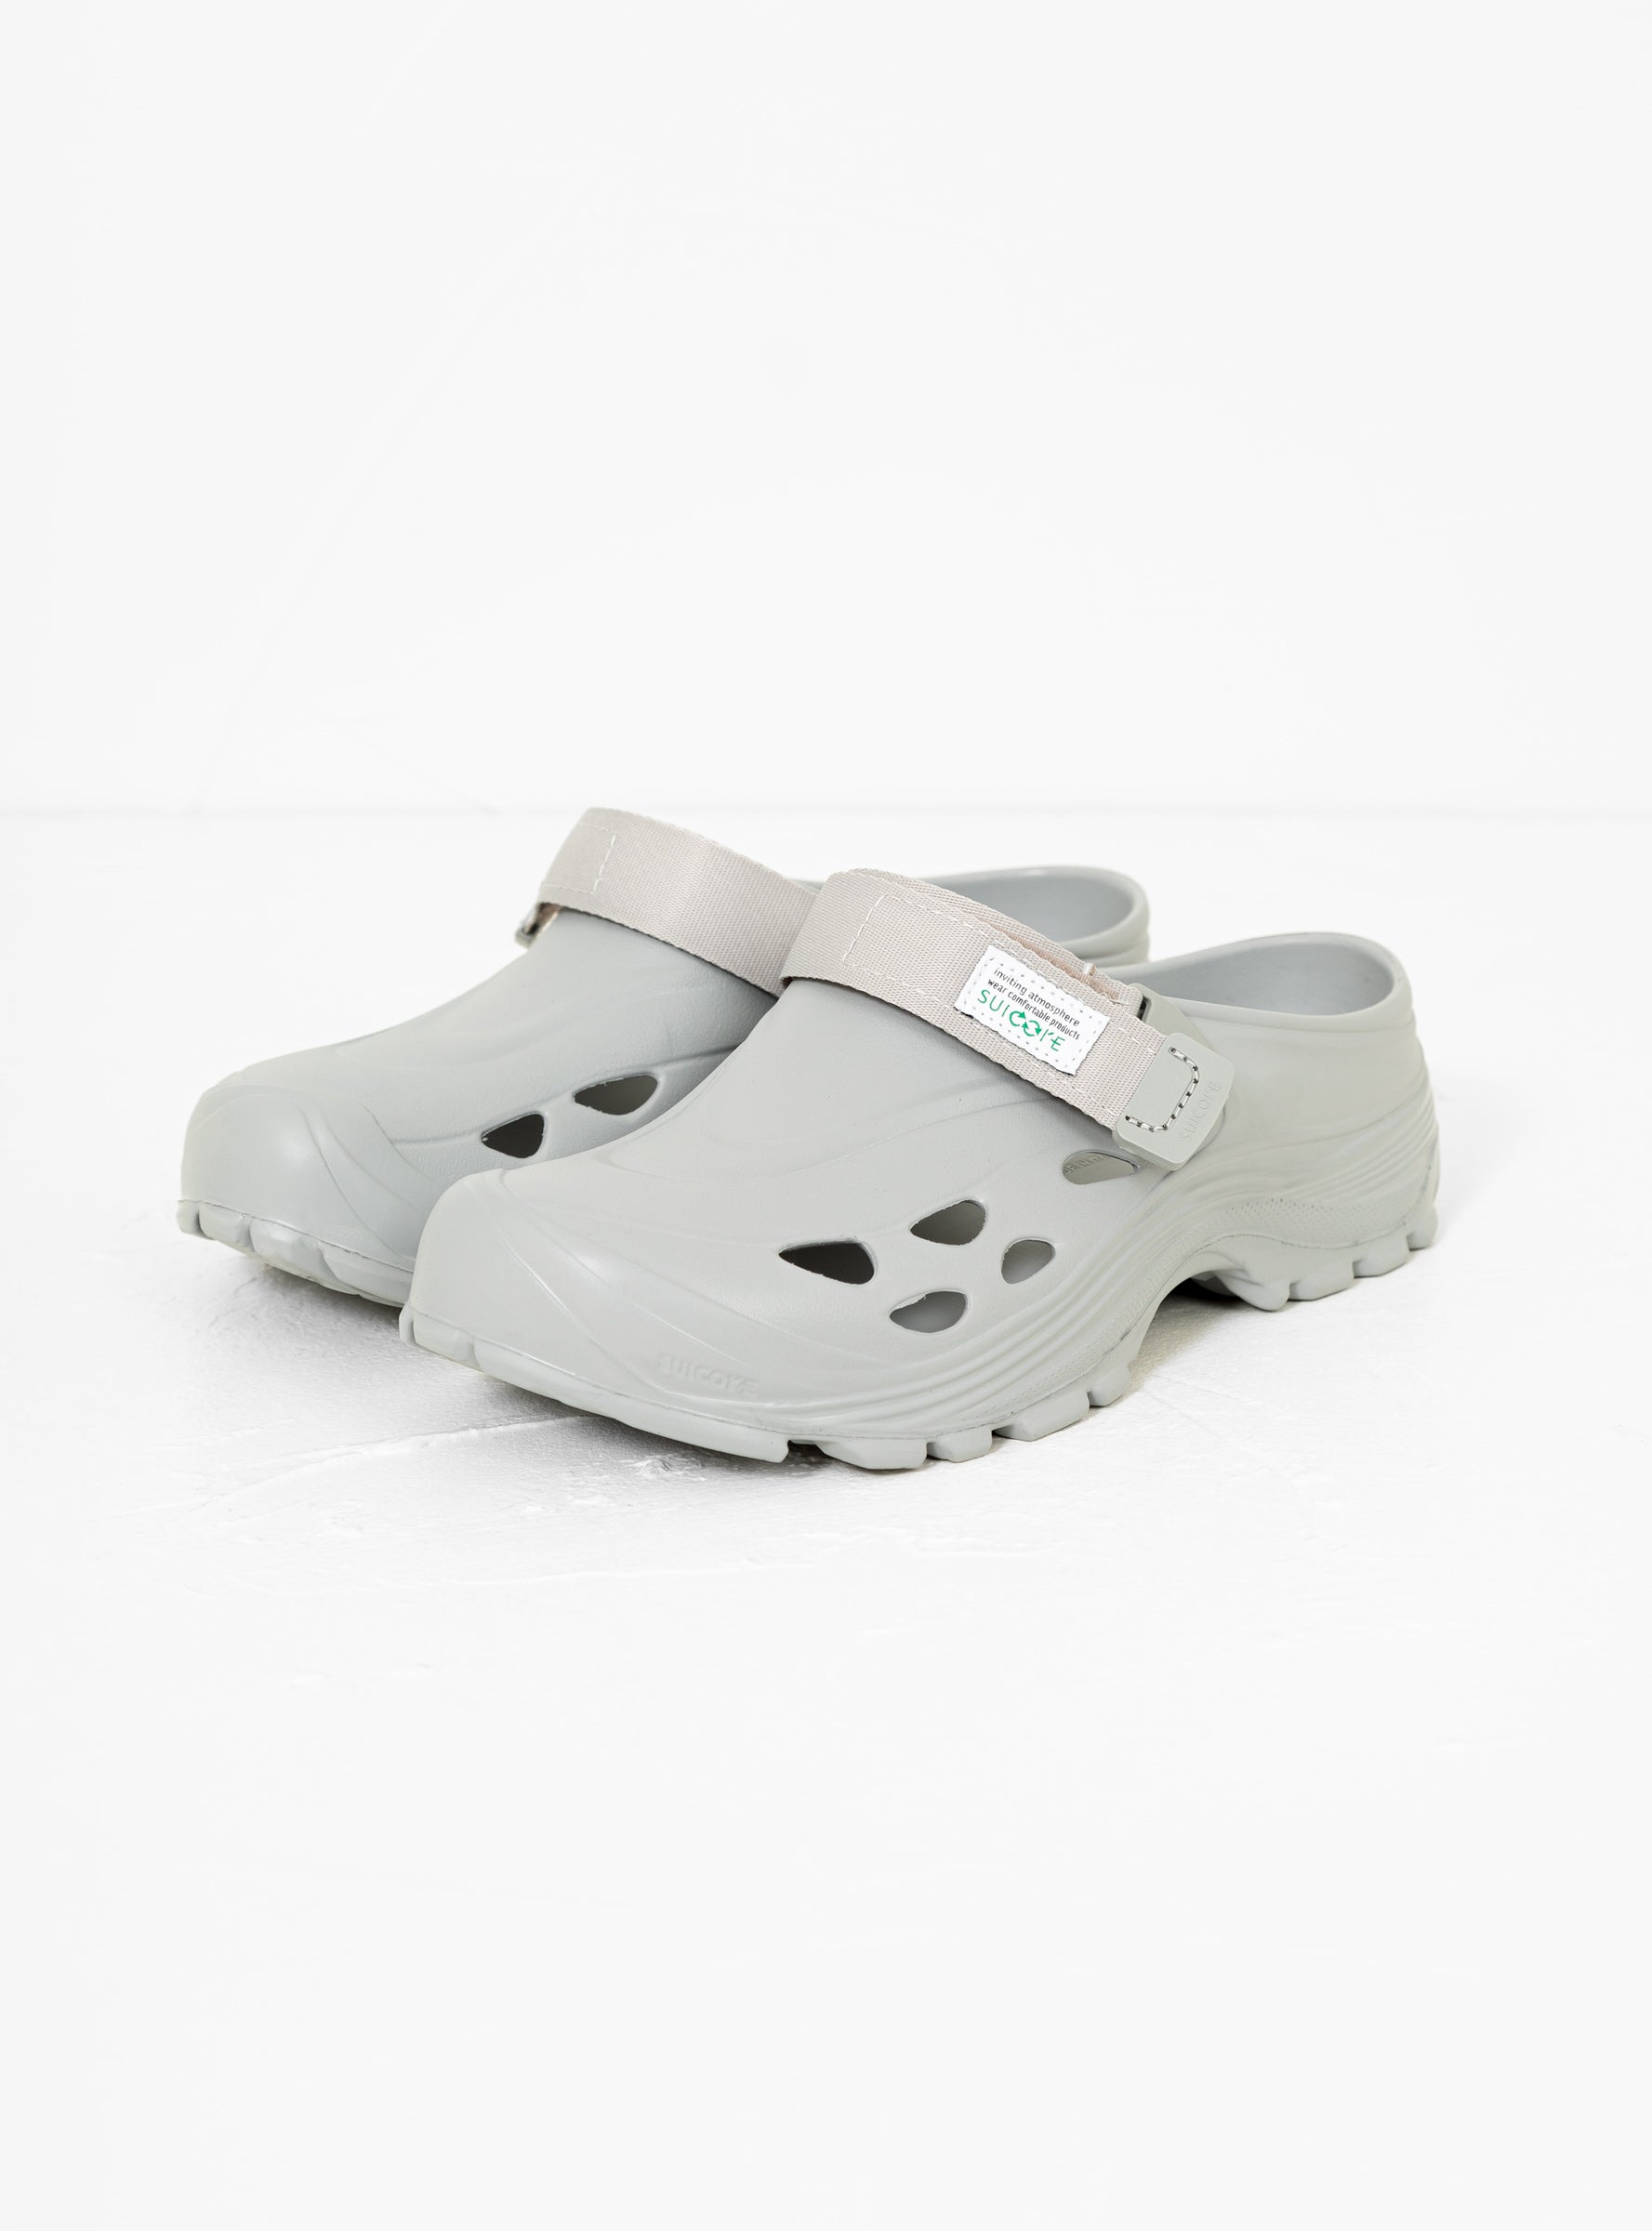 Suicoke Suicoke Mok Slides Grey - Size: UK 9